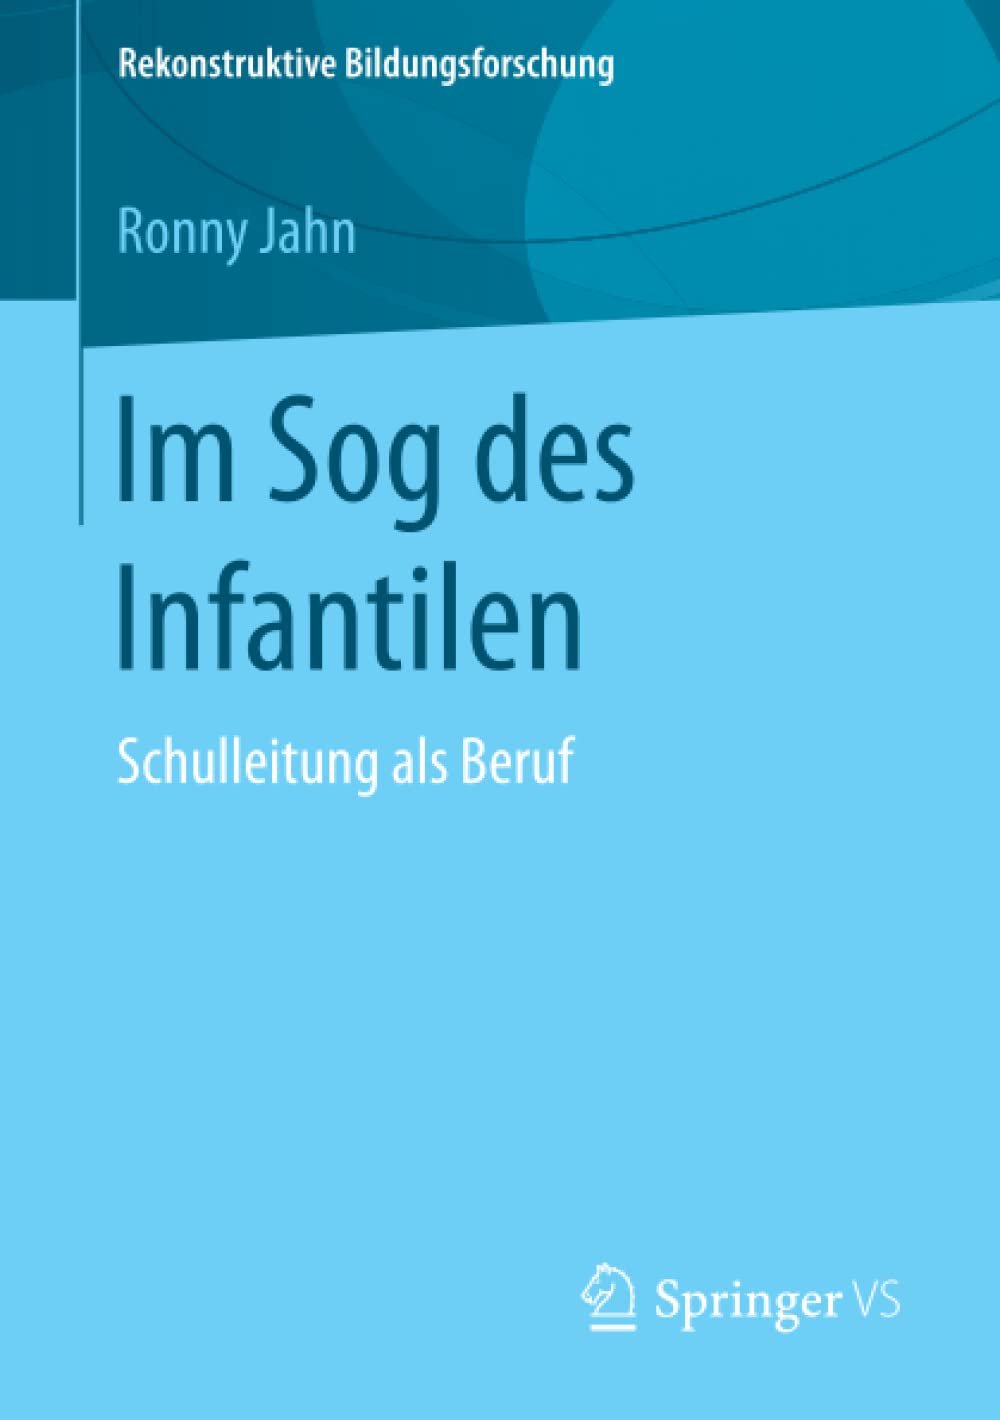 Im Sog des Infantilen: Schulleitung als Beruf (Rekonstruktive Bildungsforschung, 9) (German Edition)